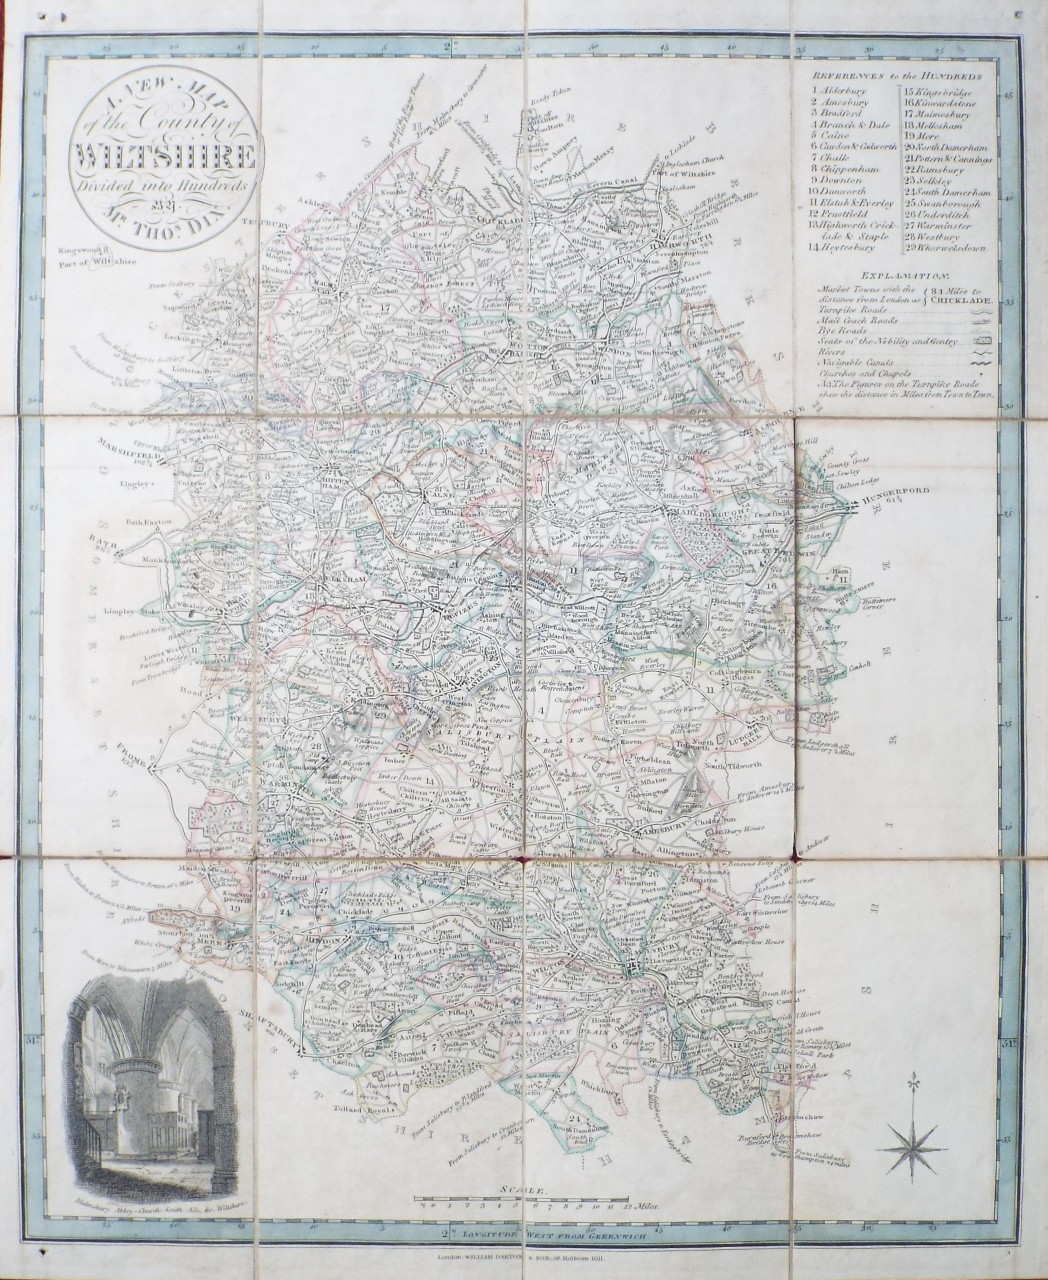 Map of Wiltshire - Malmesbury